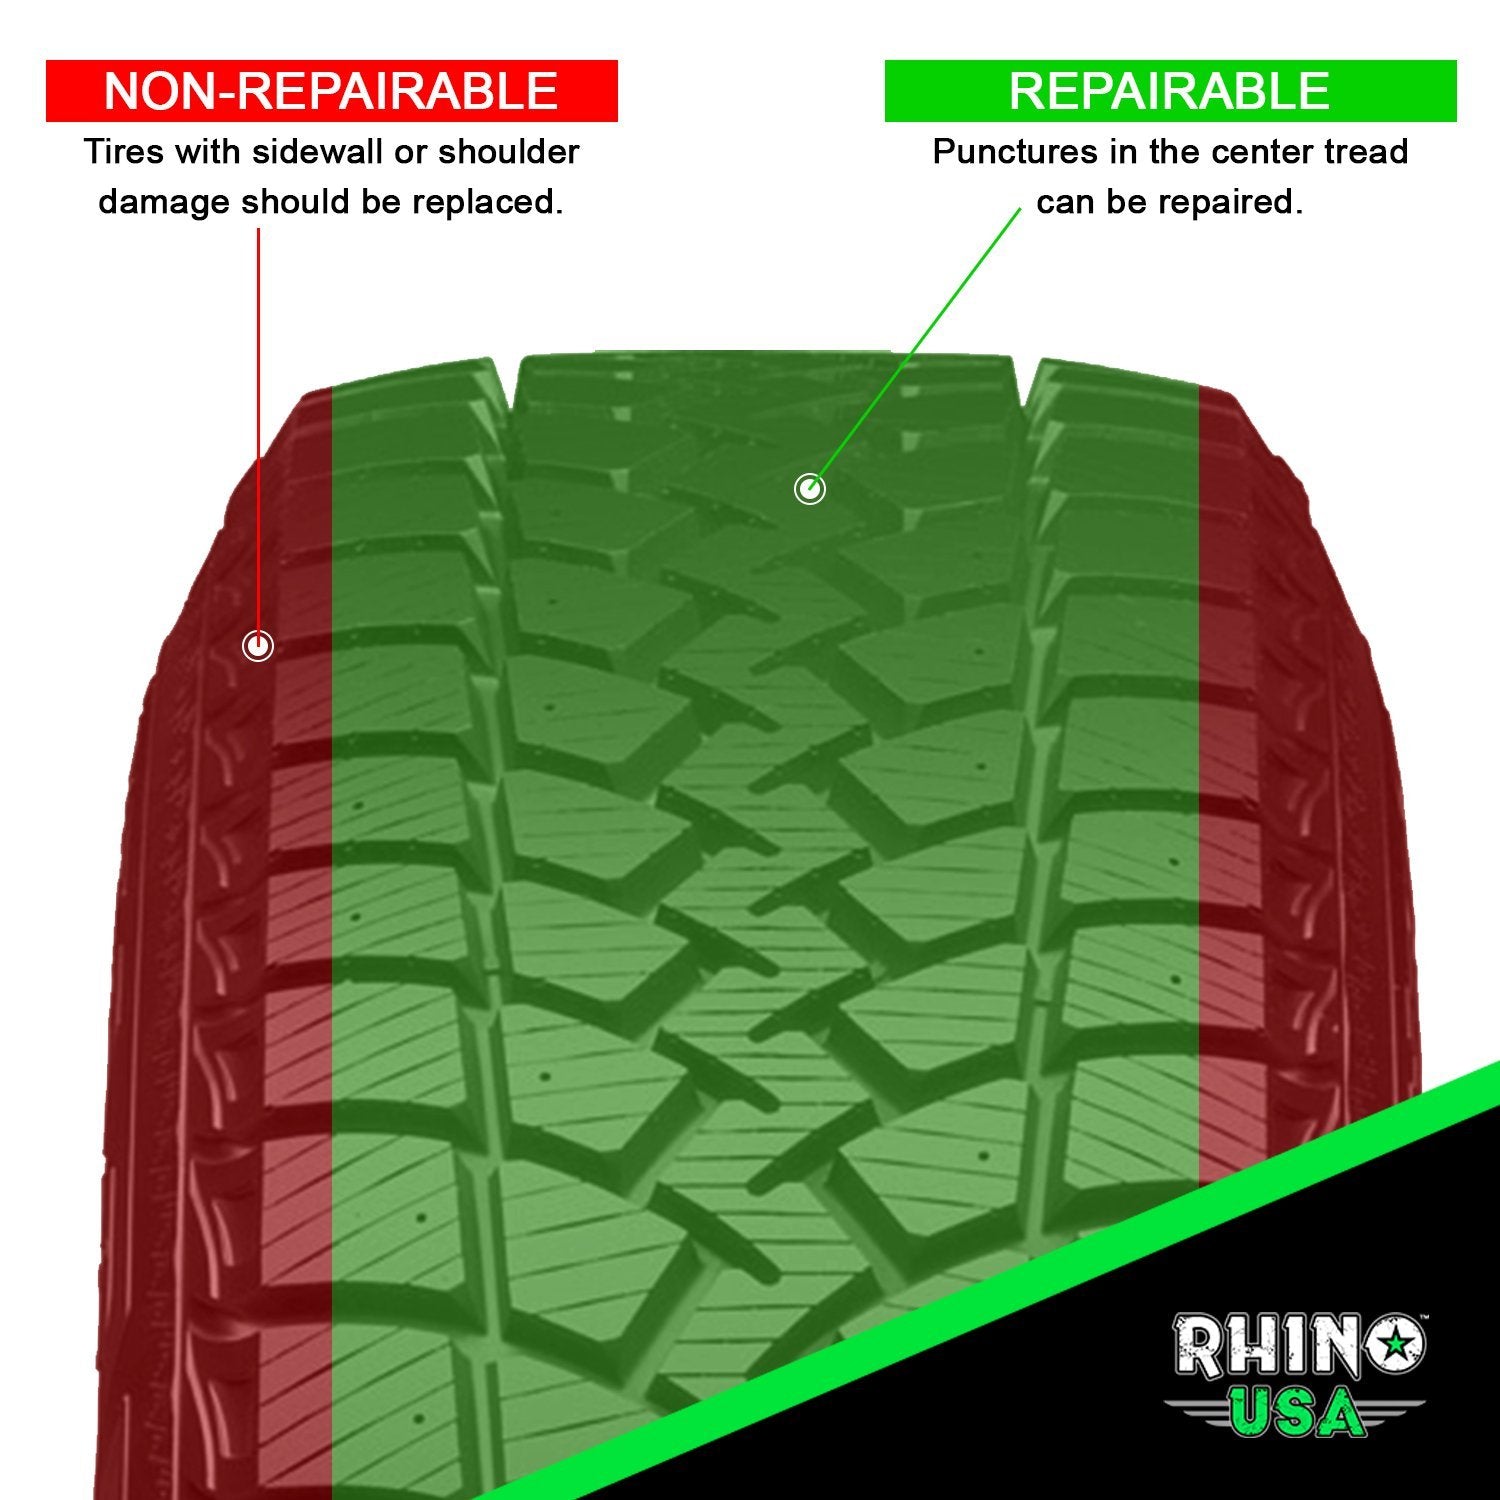 14-Piece Compact Tire Repair Kit Recovery Rhino USA, Inc. 